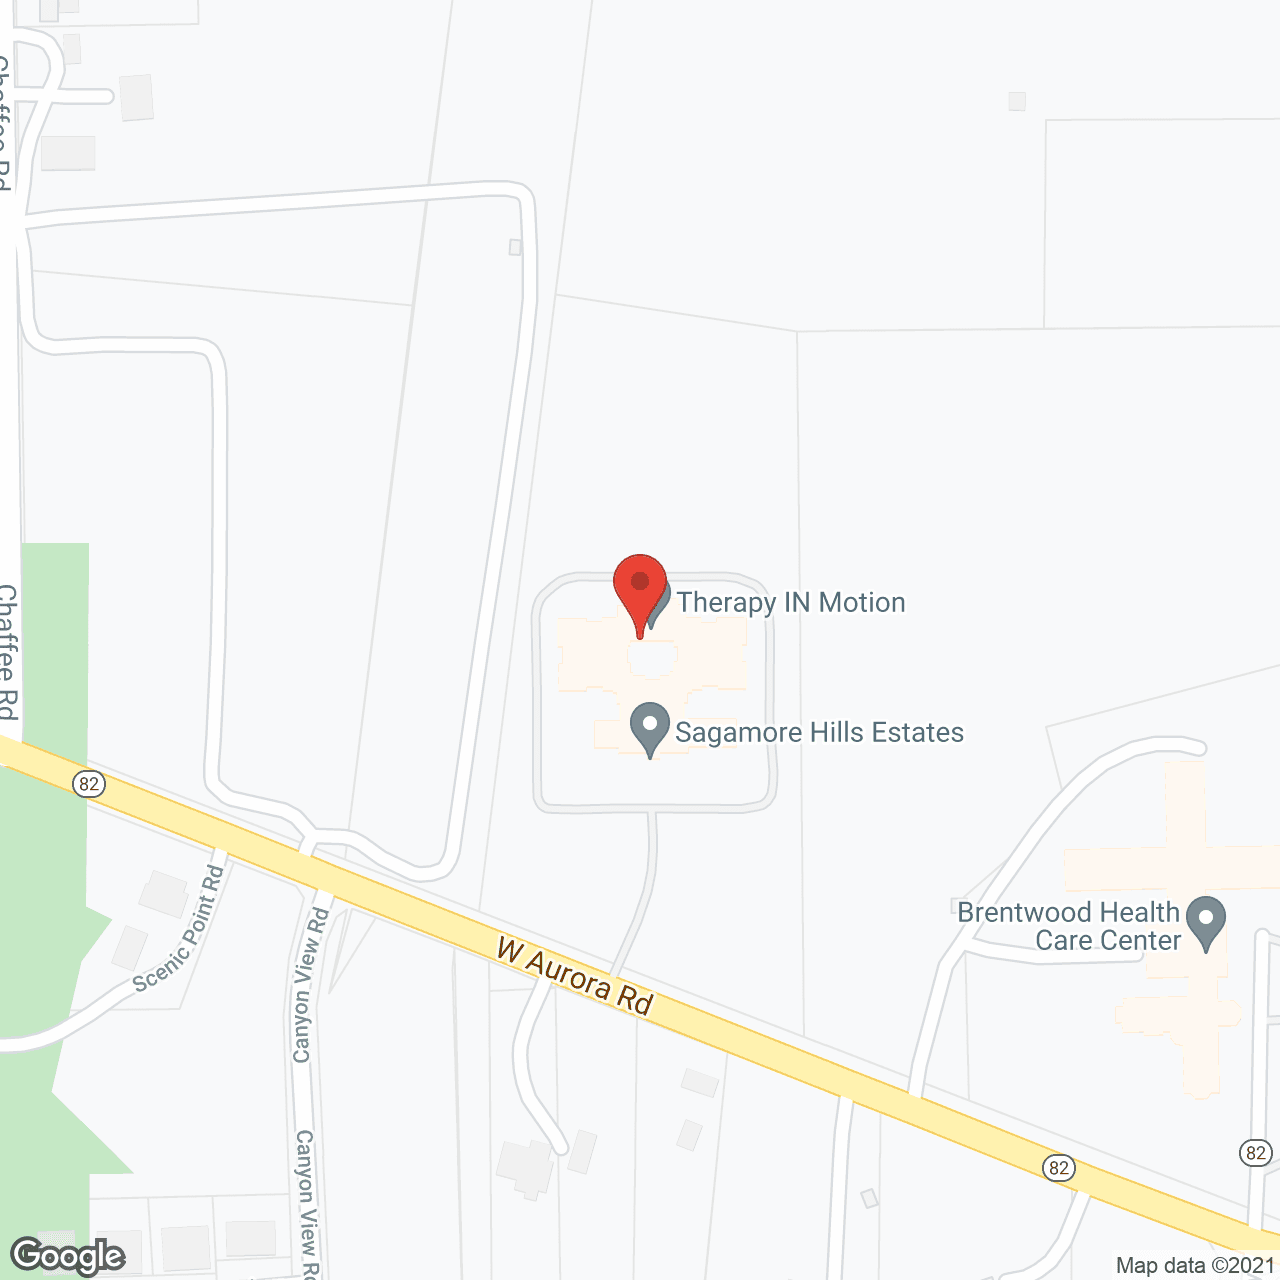 Sagamore Hills in google map